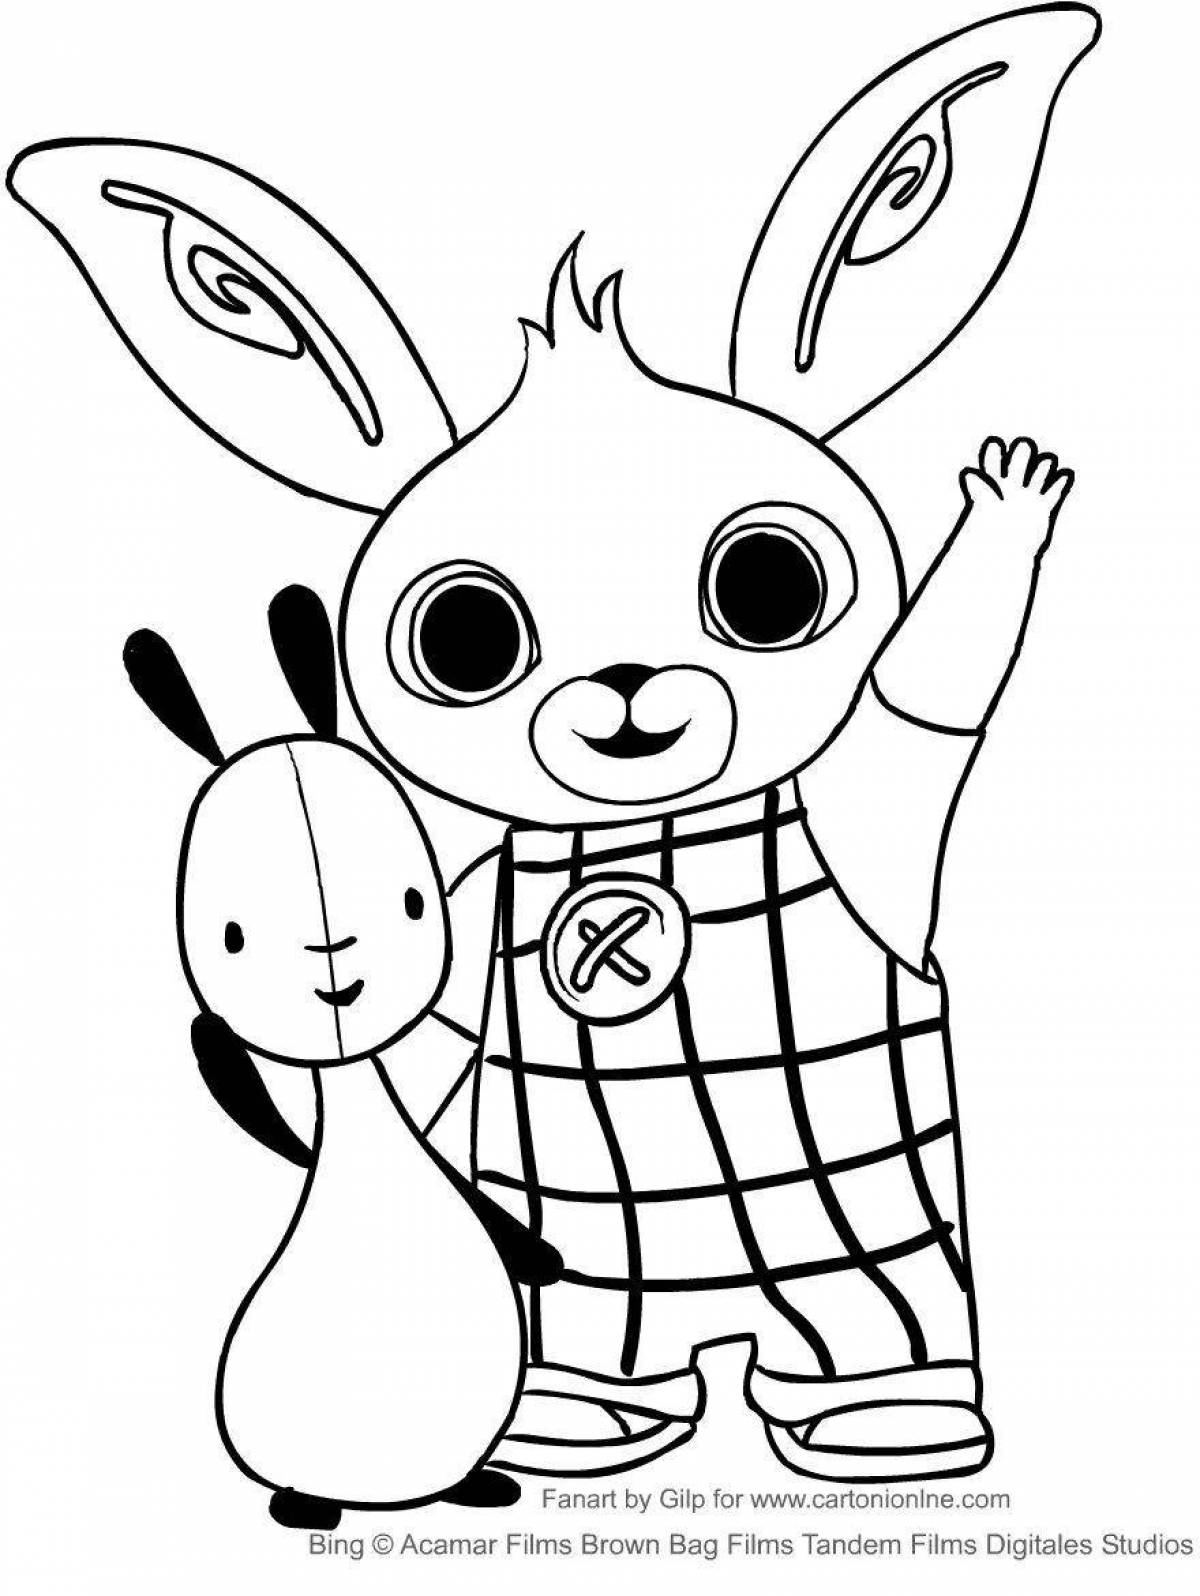 Coloring big-nosed cartoon rabbit